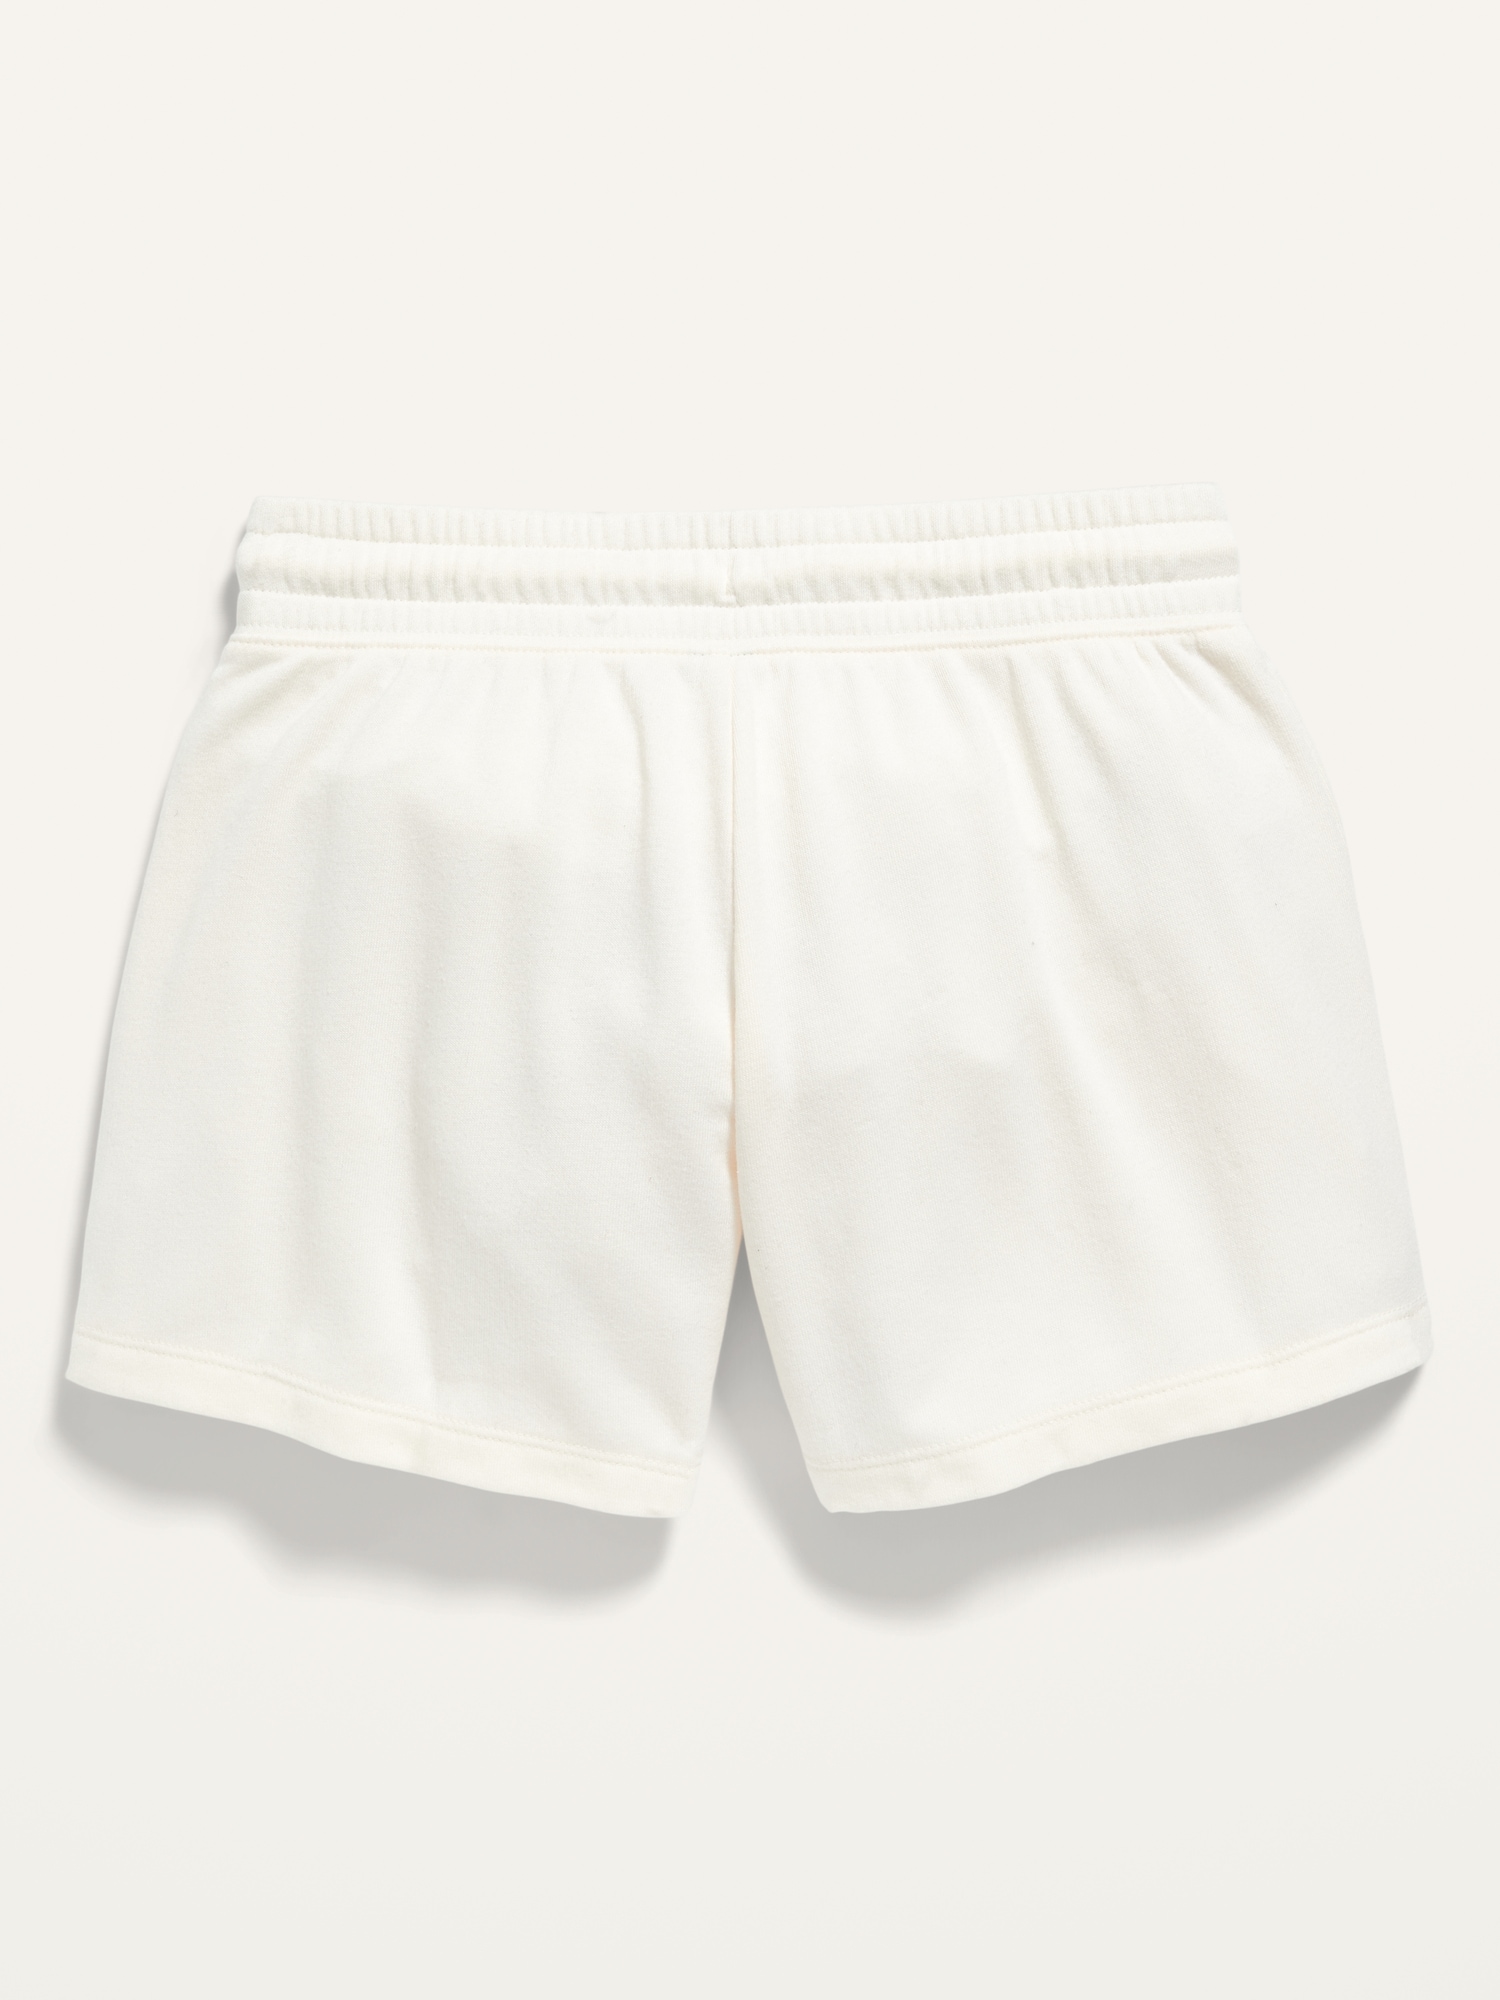 Vintage Drawstring Shorts for Girls | Old Navy